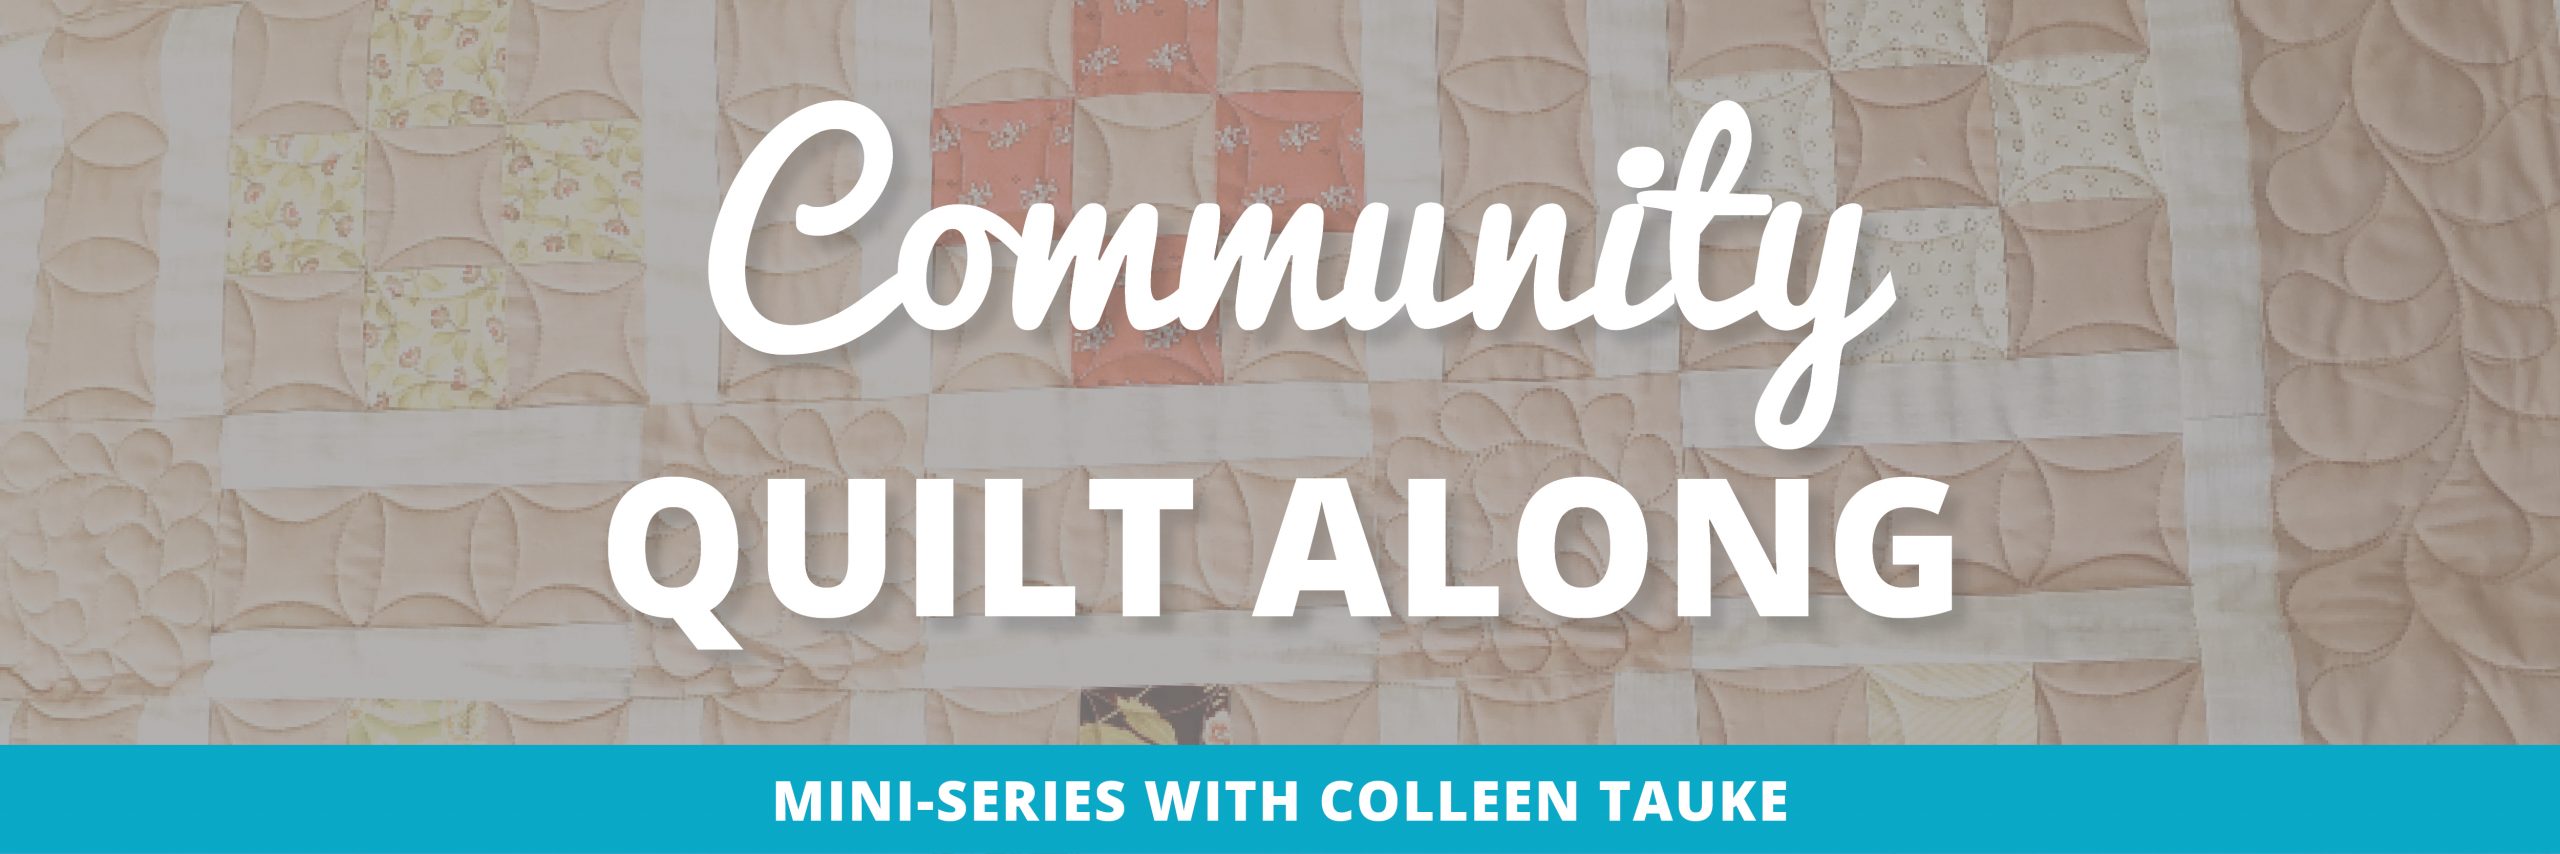 Community quilt along text